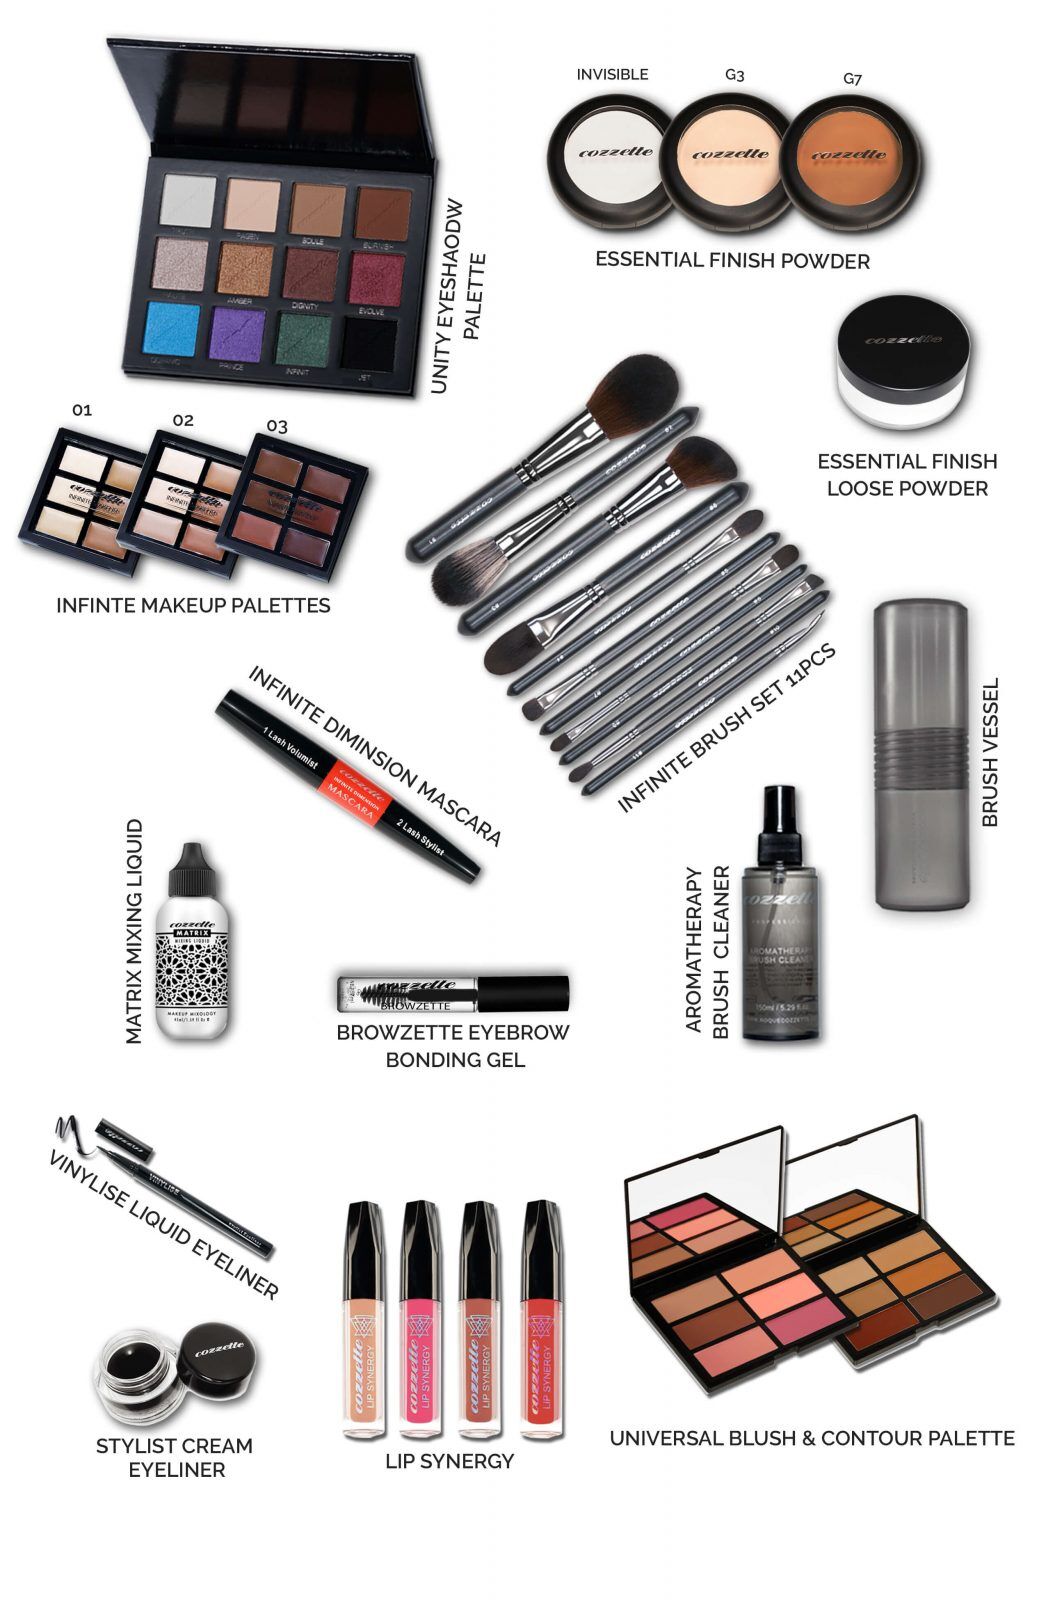 Beauty school: makeup brush cleaners